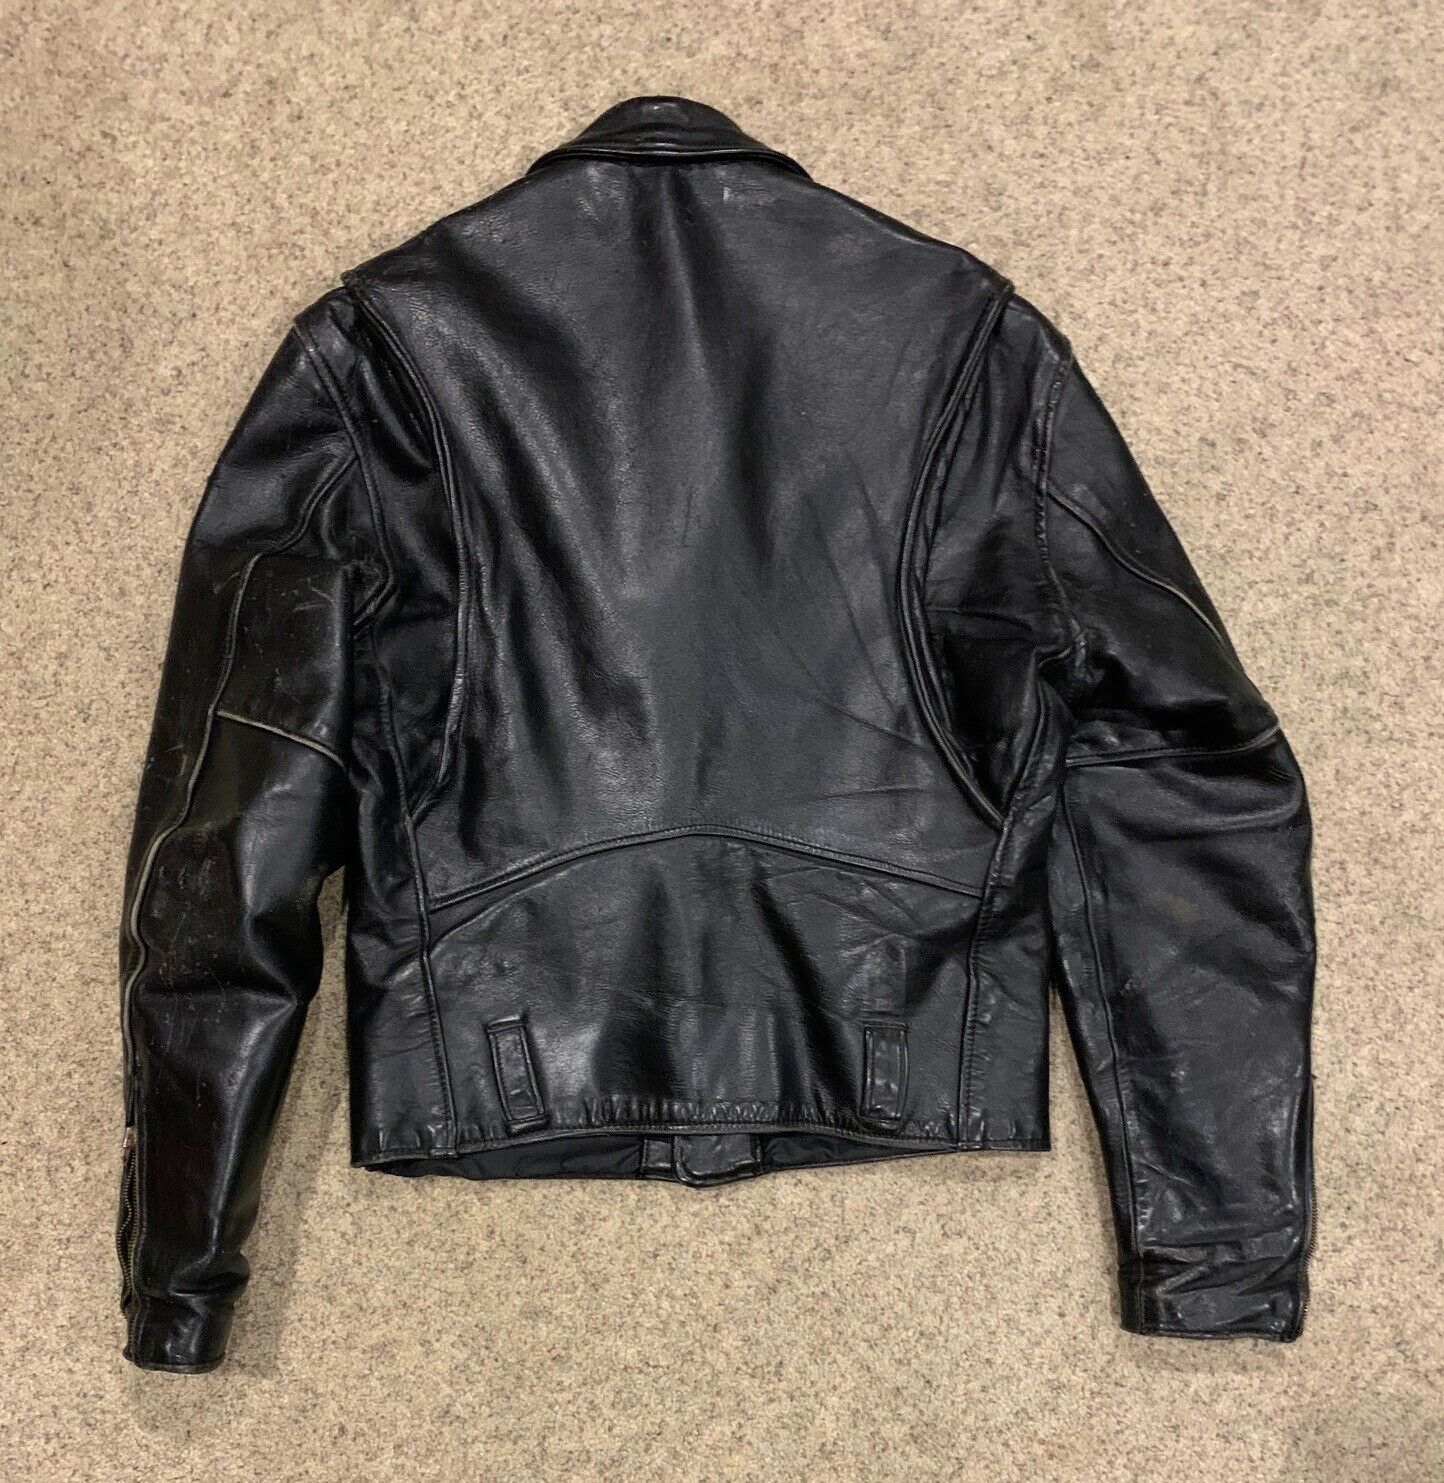 Lesco biker jacket, 40 | The Fedora Lounge